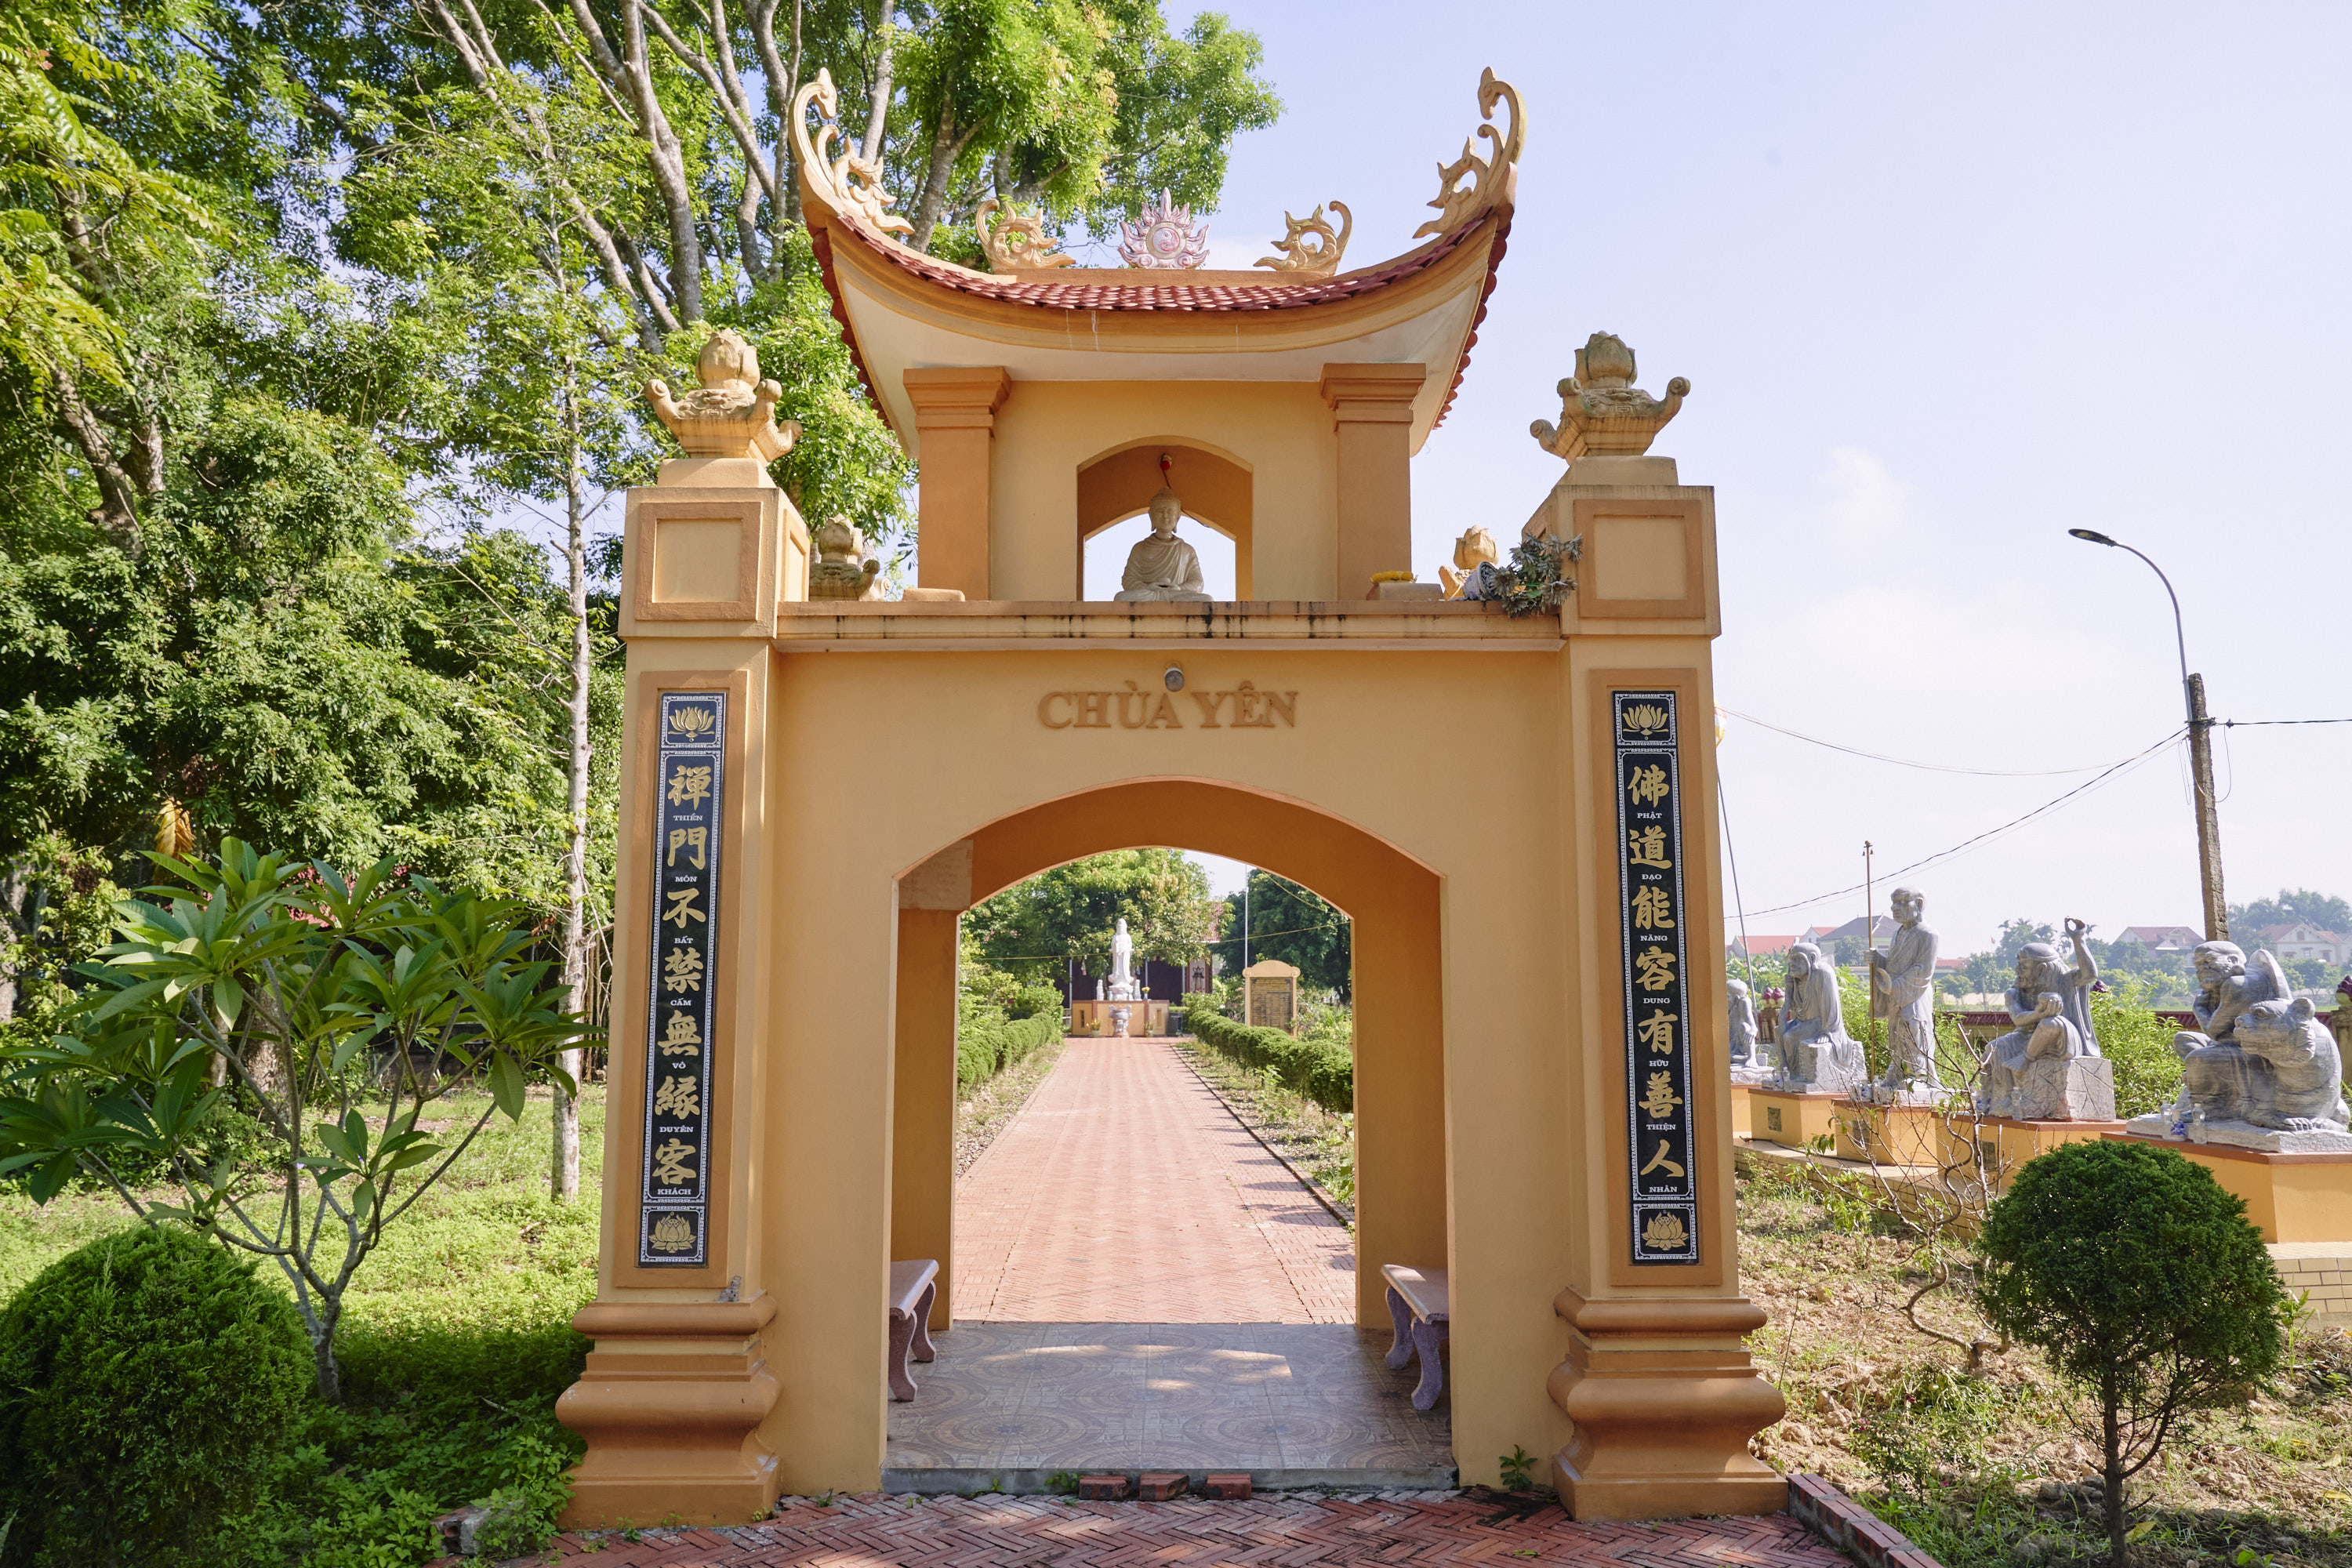 Ca temple - Yen Thanh